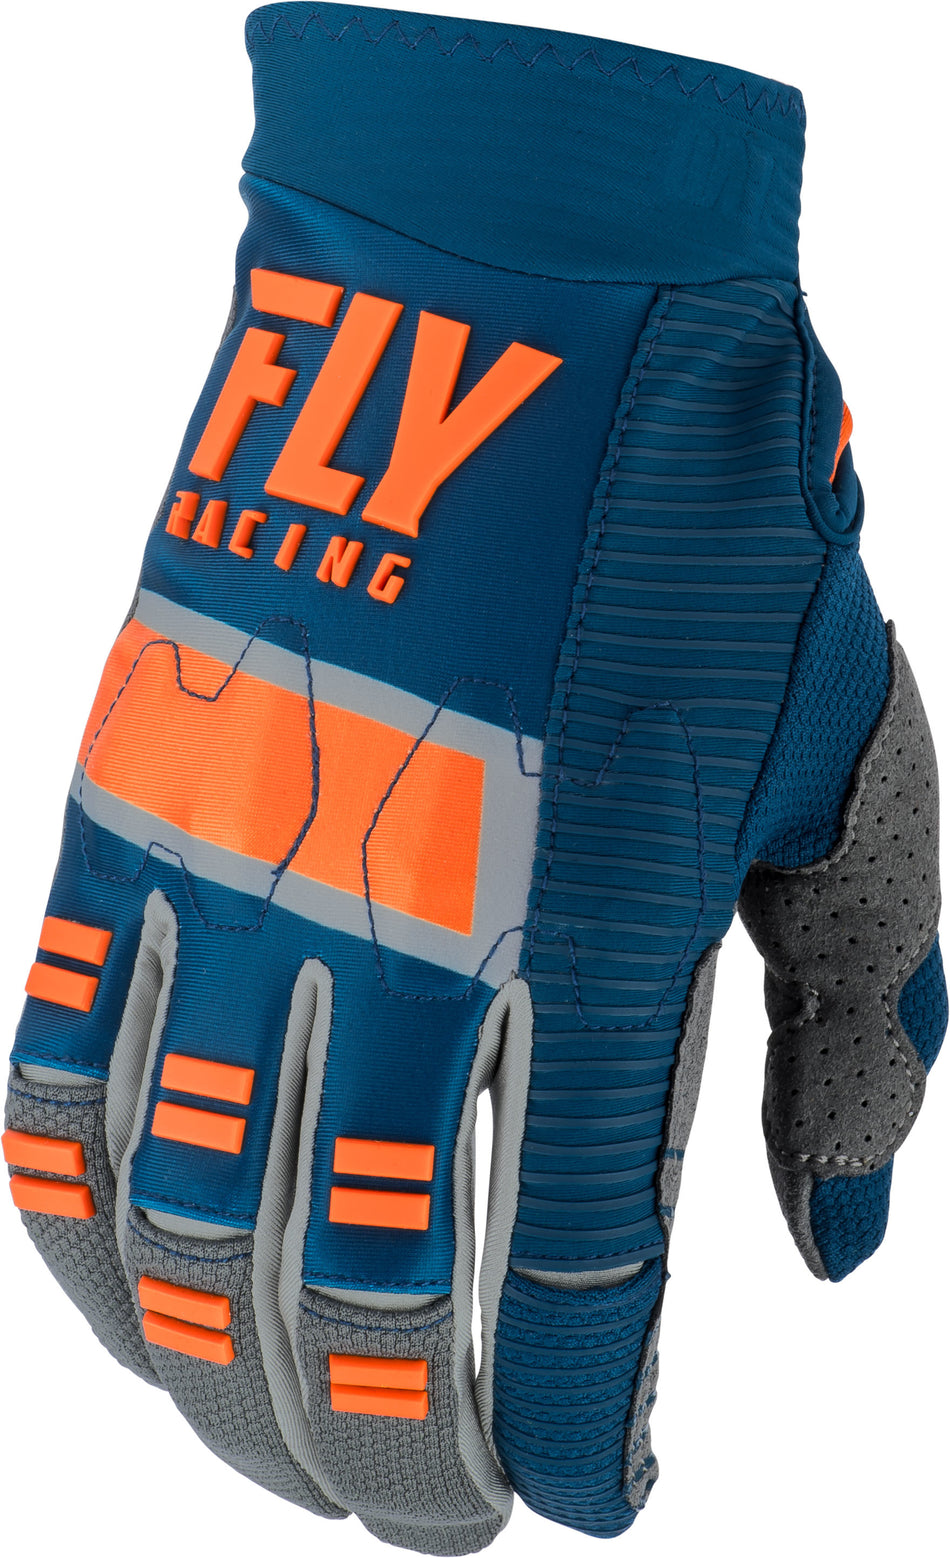 FLY RACING Evolution Dst Gloves Navy/Grey/Orange Sz 10 372-11110